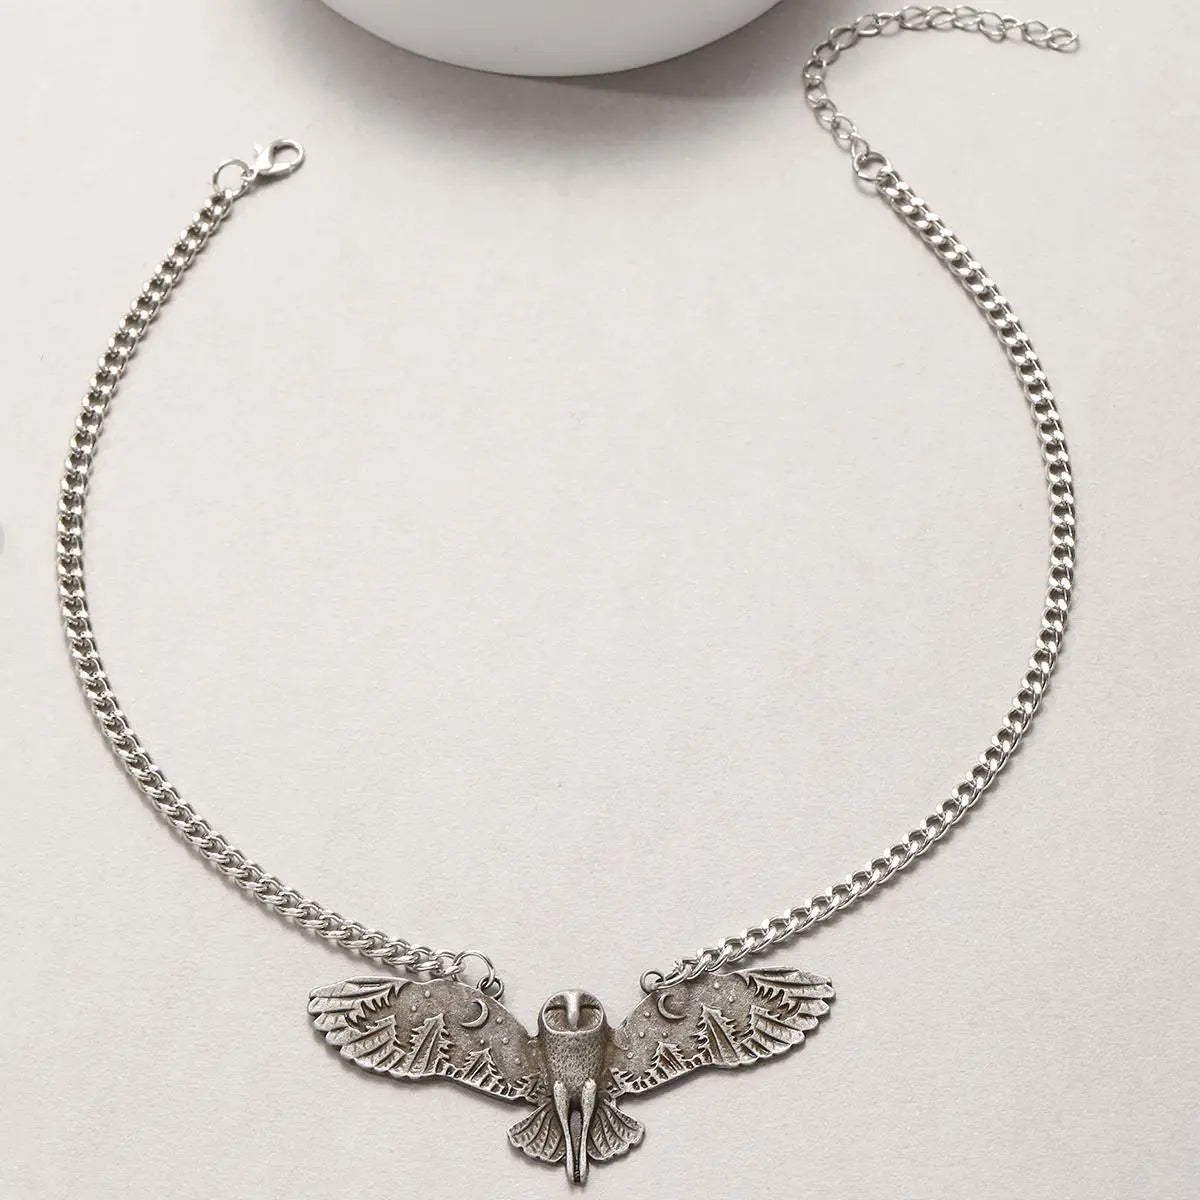 Vintage Owl Necklace